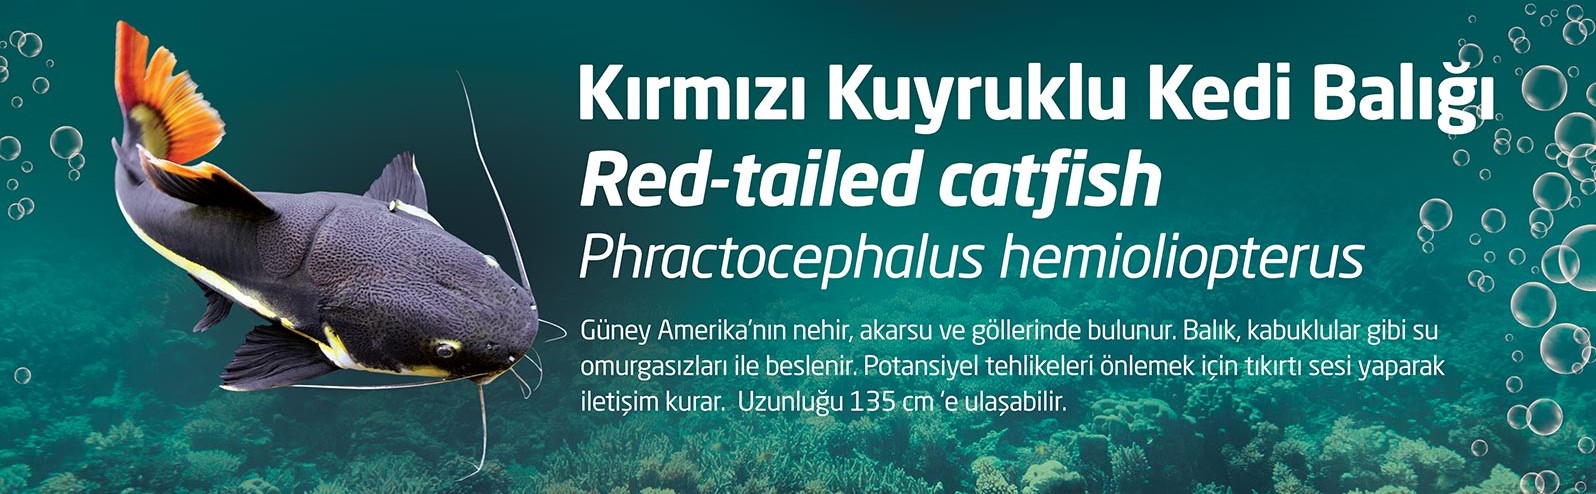 kirmizi kuyruklu kedi baligi red tailed catfish bursa zoo bursa hayvanat bahcesi